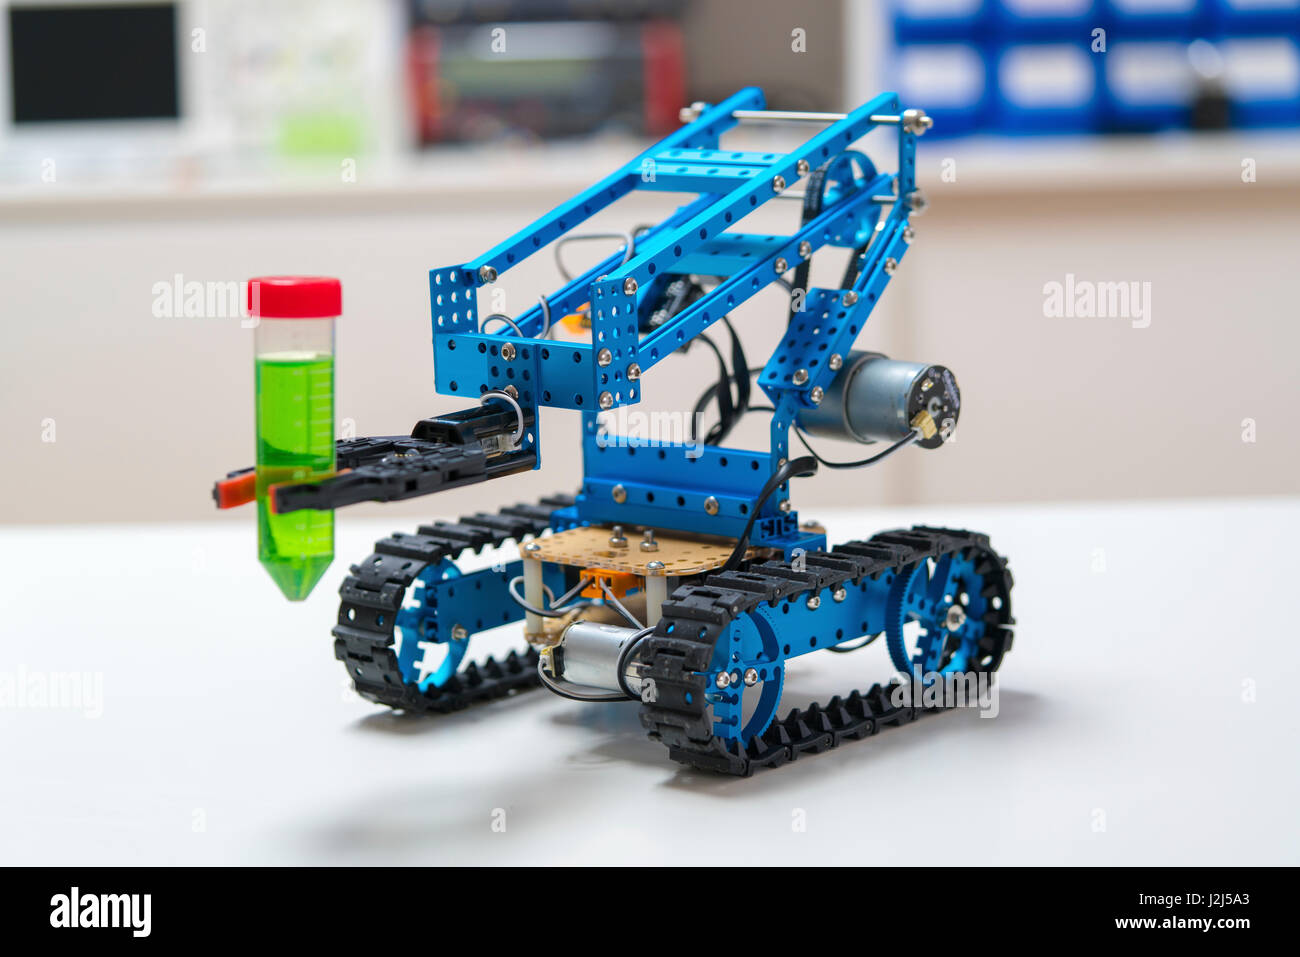 Robotic arm holding test tube on caterpillar tracks. Stock Photo